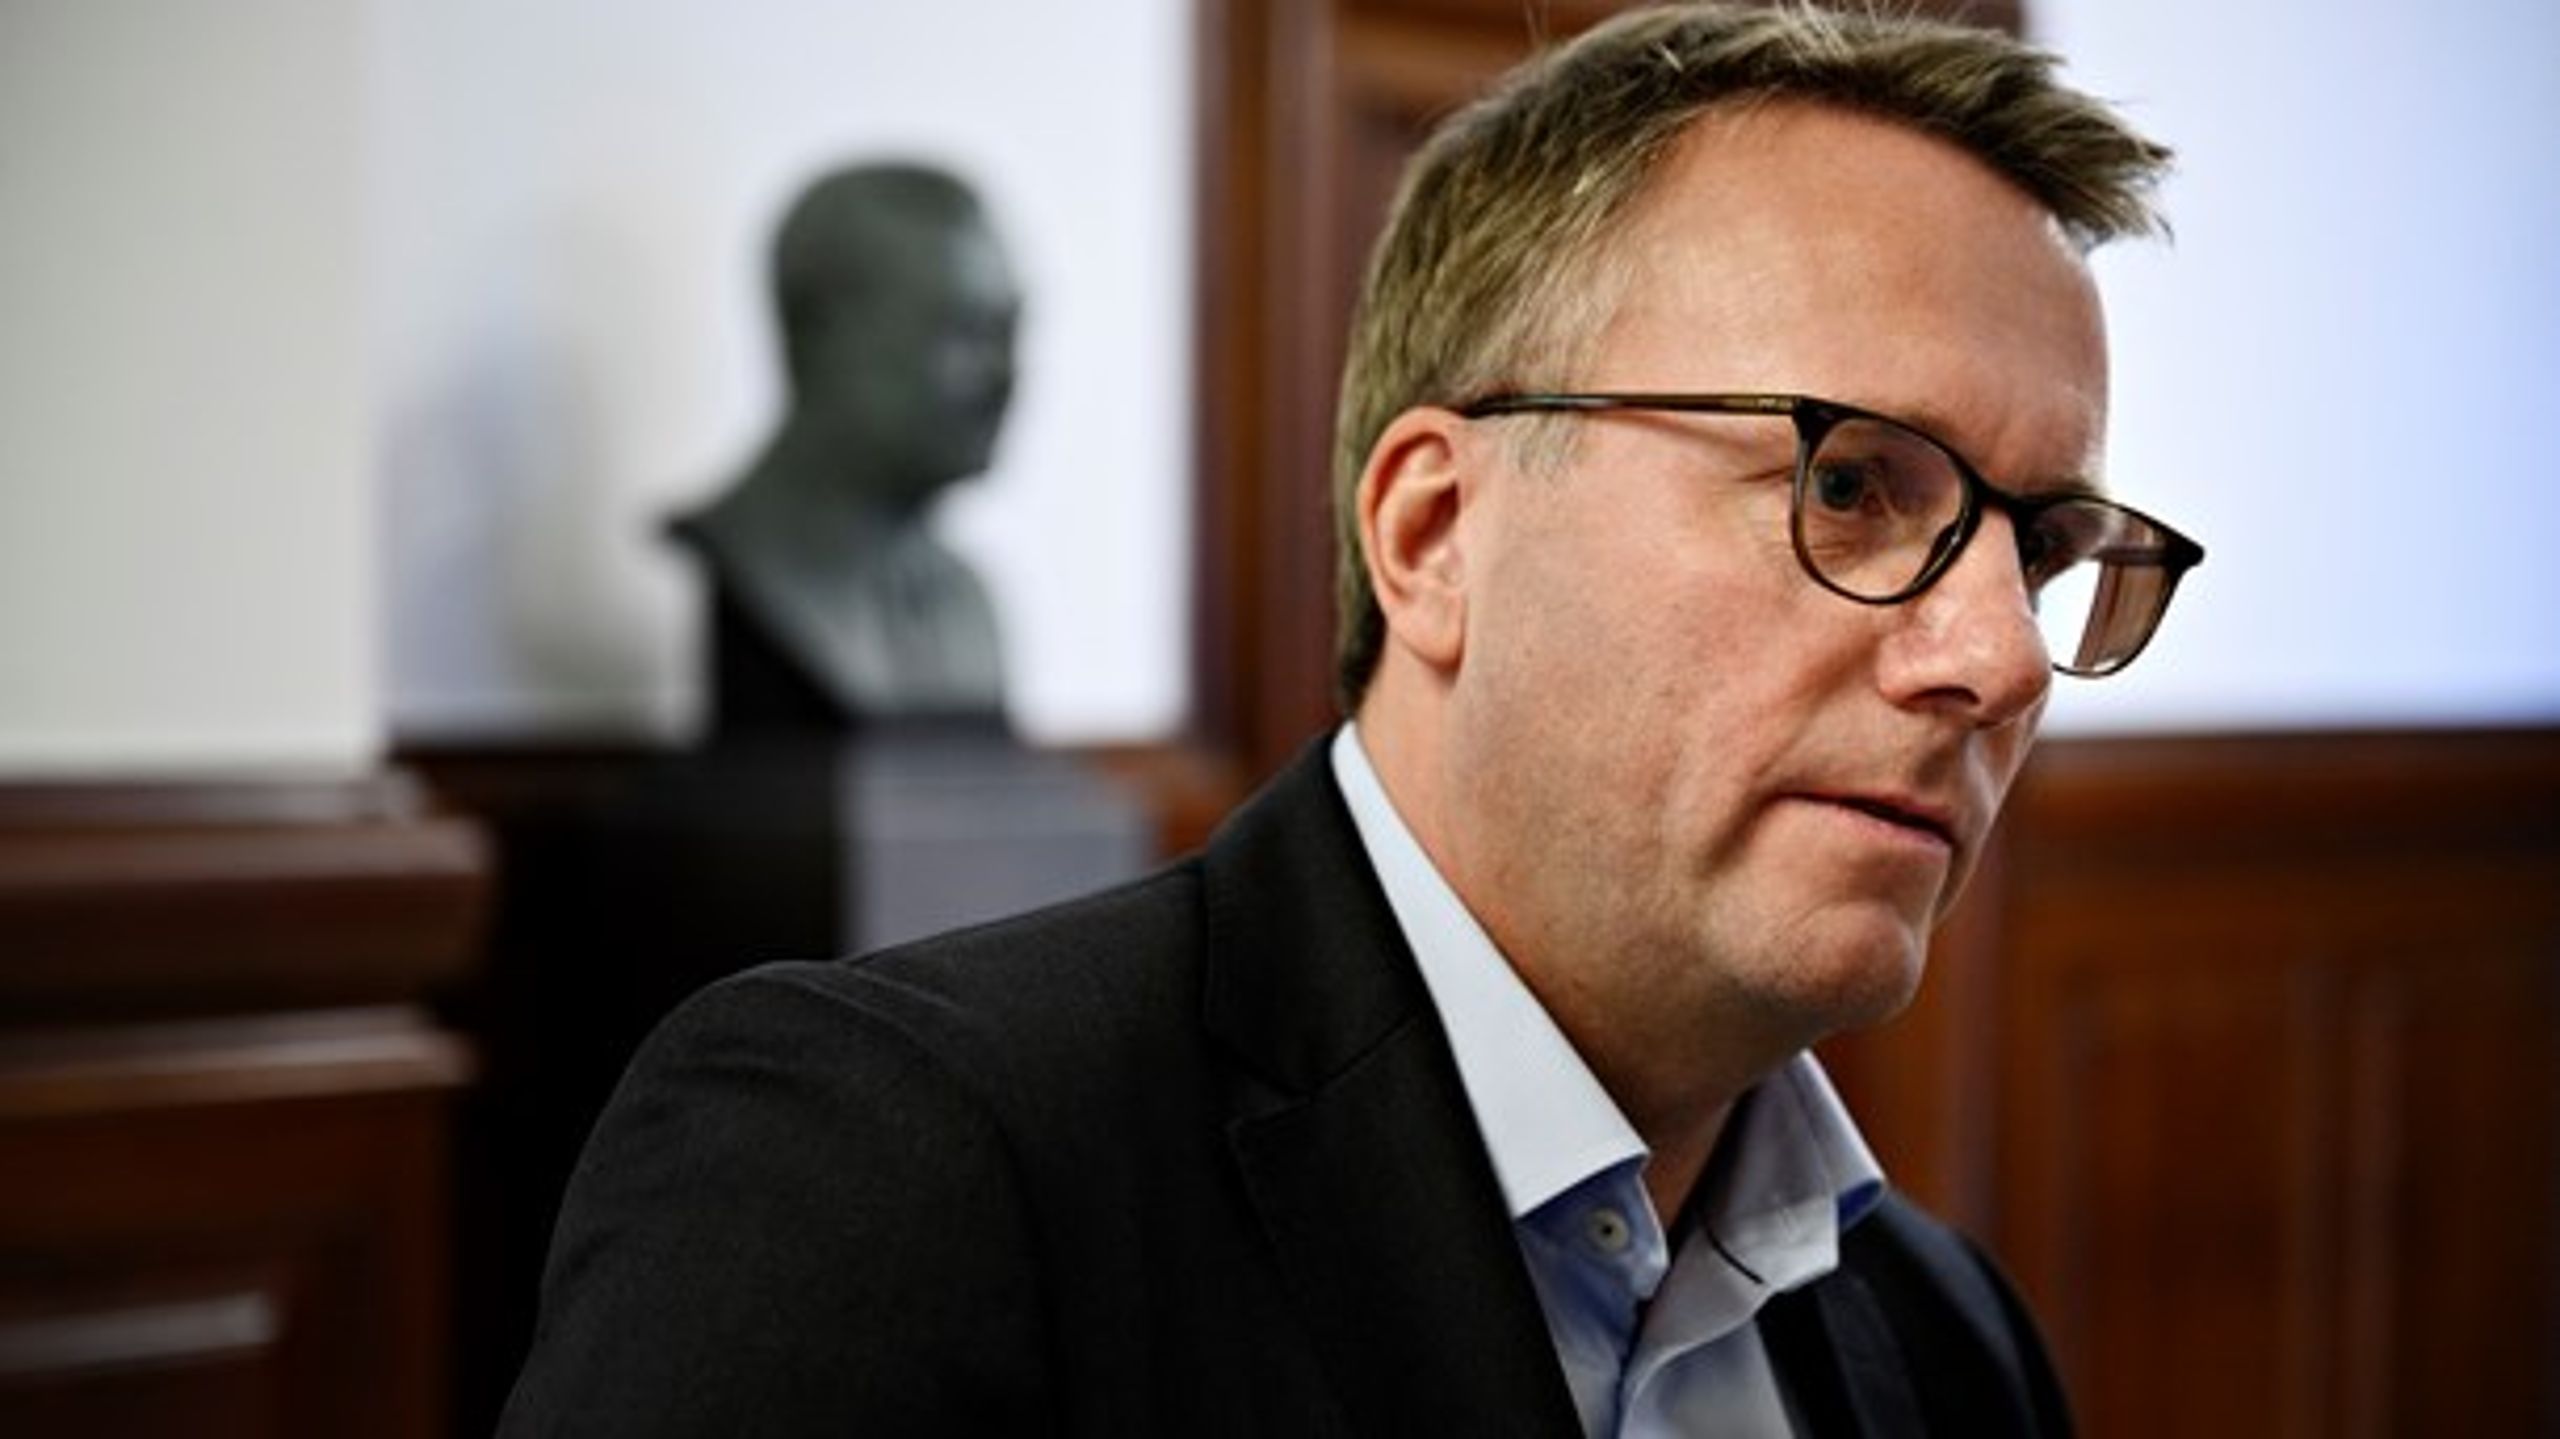 IT-problemerne i Skat er en "gammelkendt" historie, mener skatteminister Morten Bødskov (S).&nbsp;